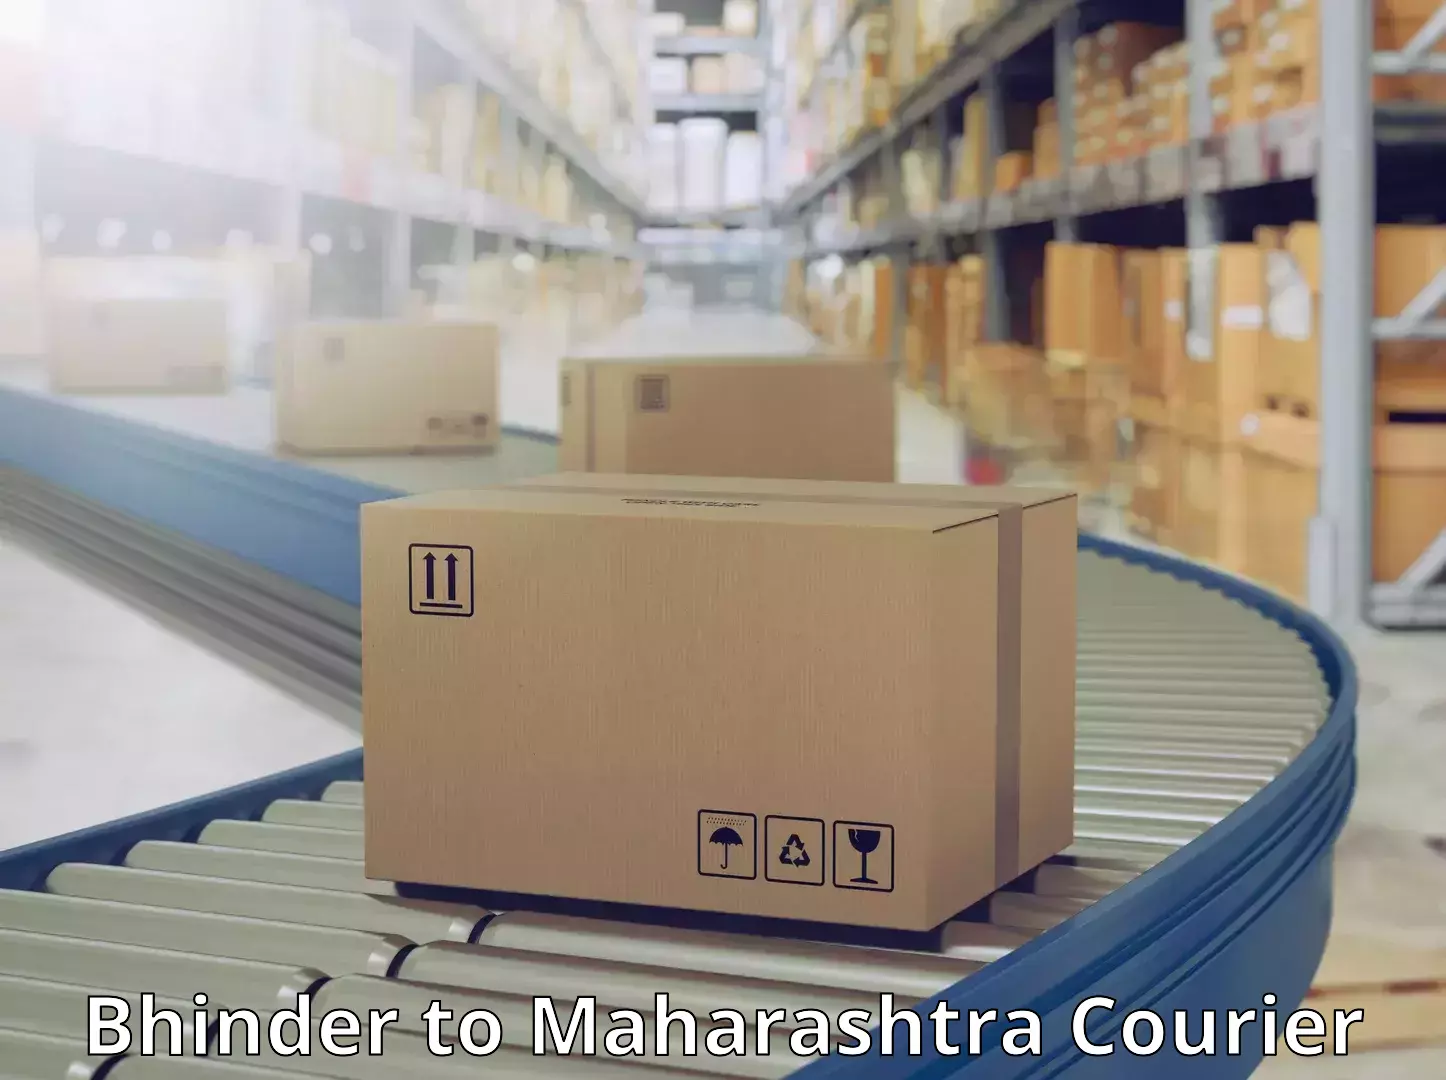 Efficient order fulfillment Bhinder to Maharashtra